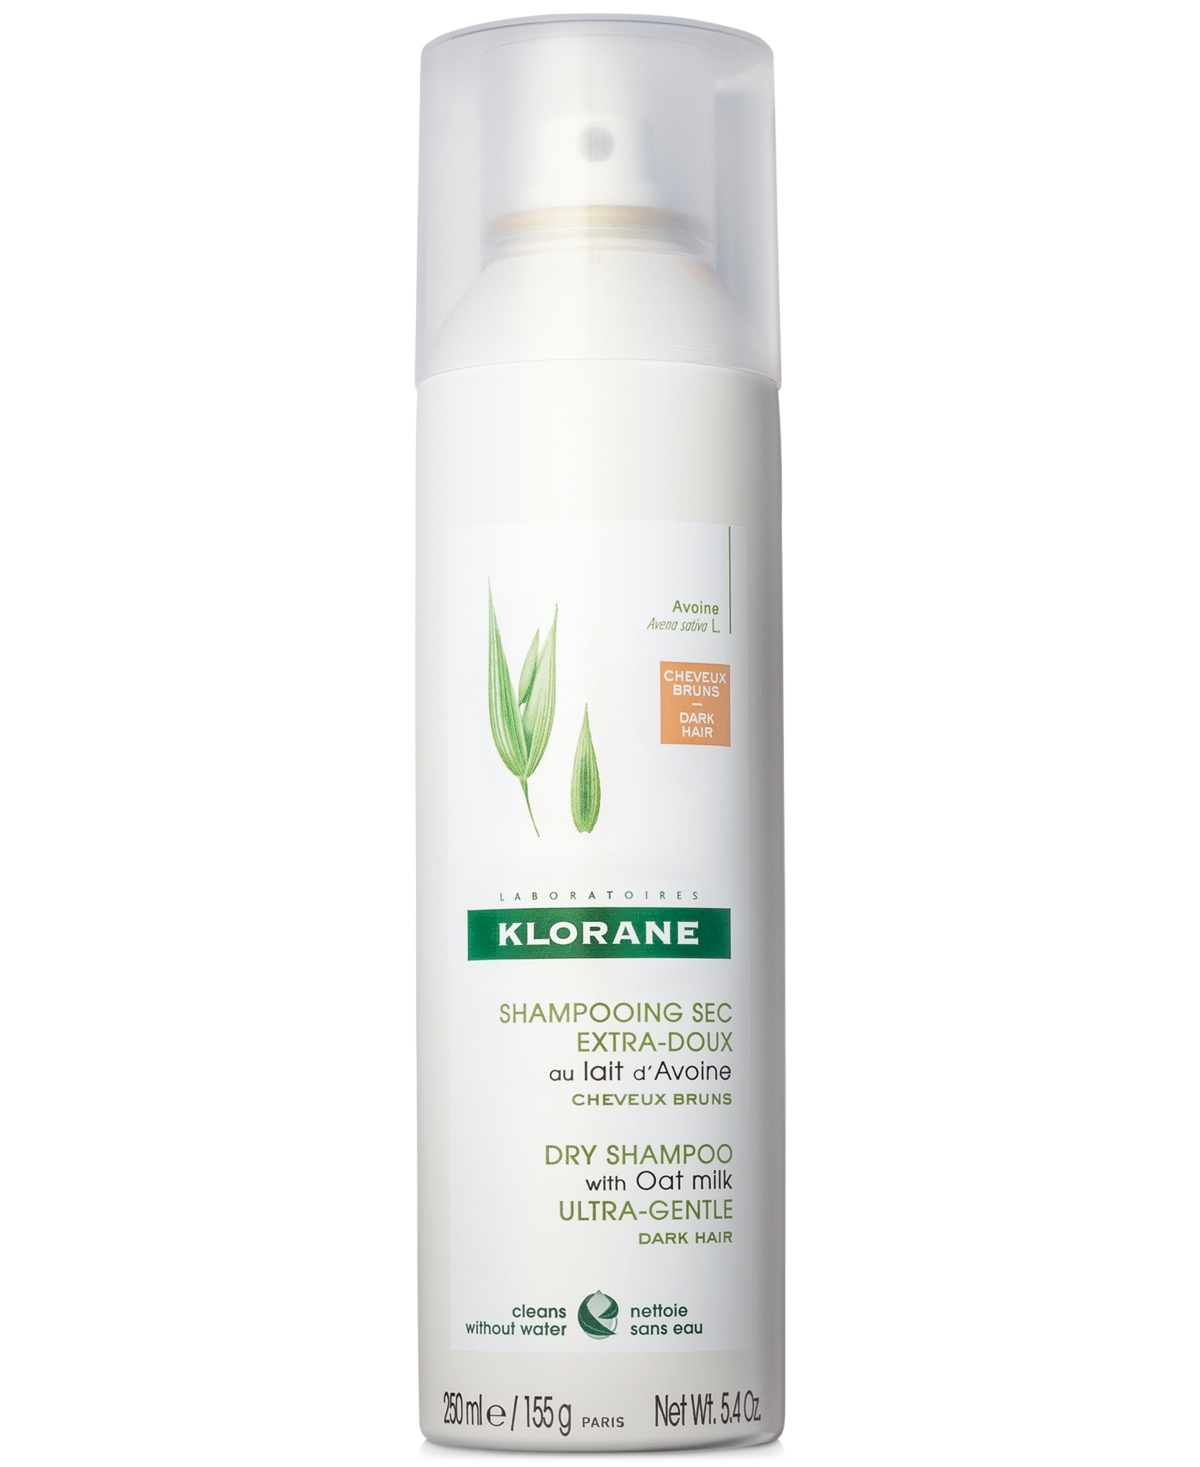 Klorane Dry Shampoo With Oat Milk - Natural Tint, 5.4-oz.